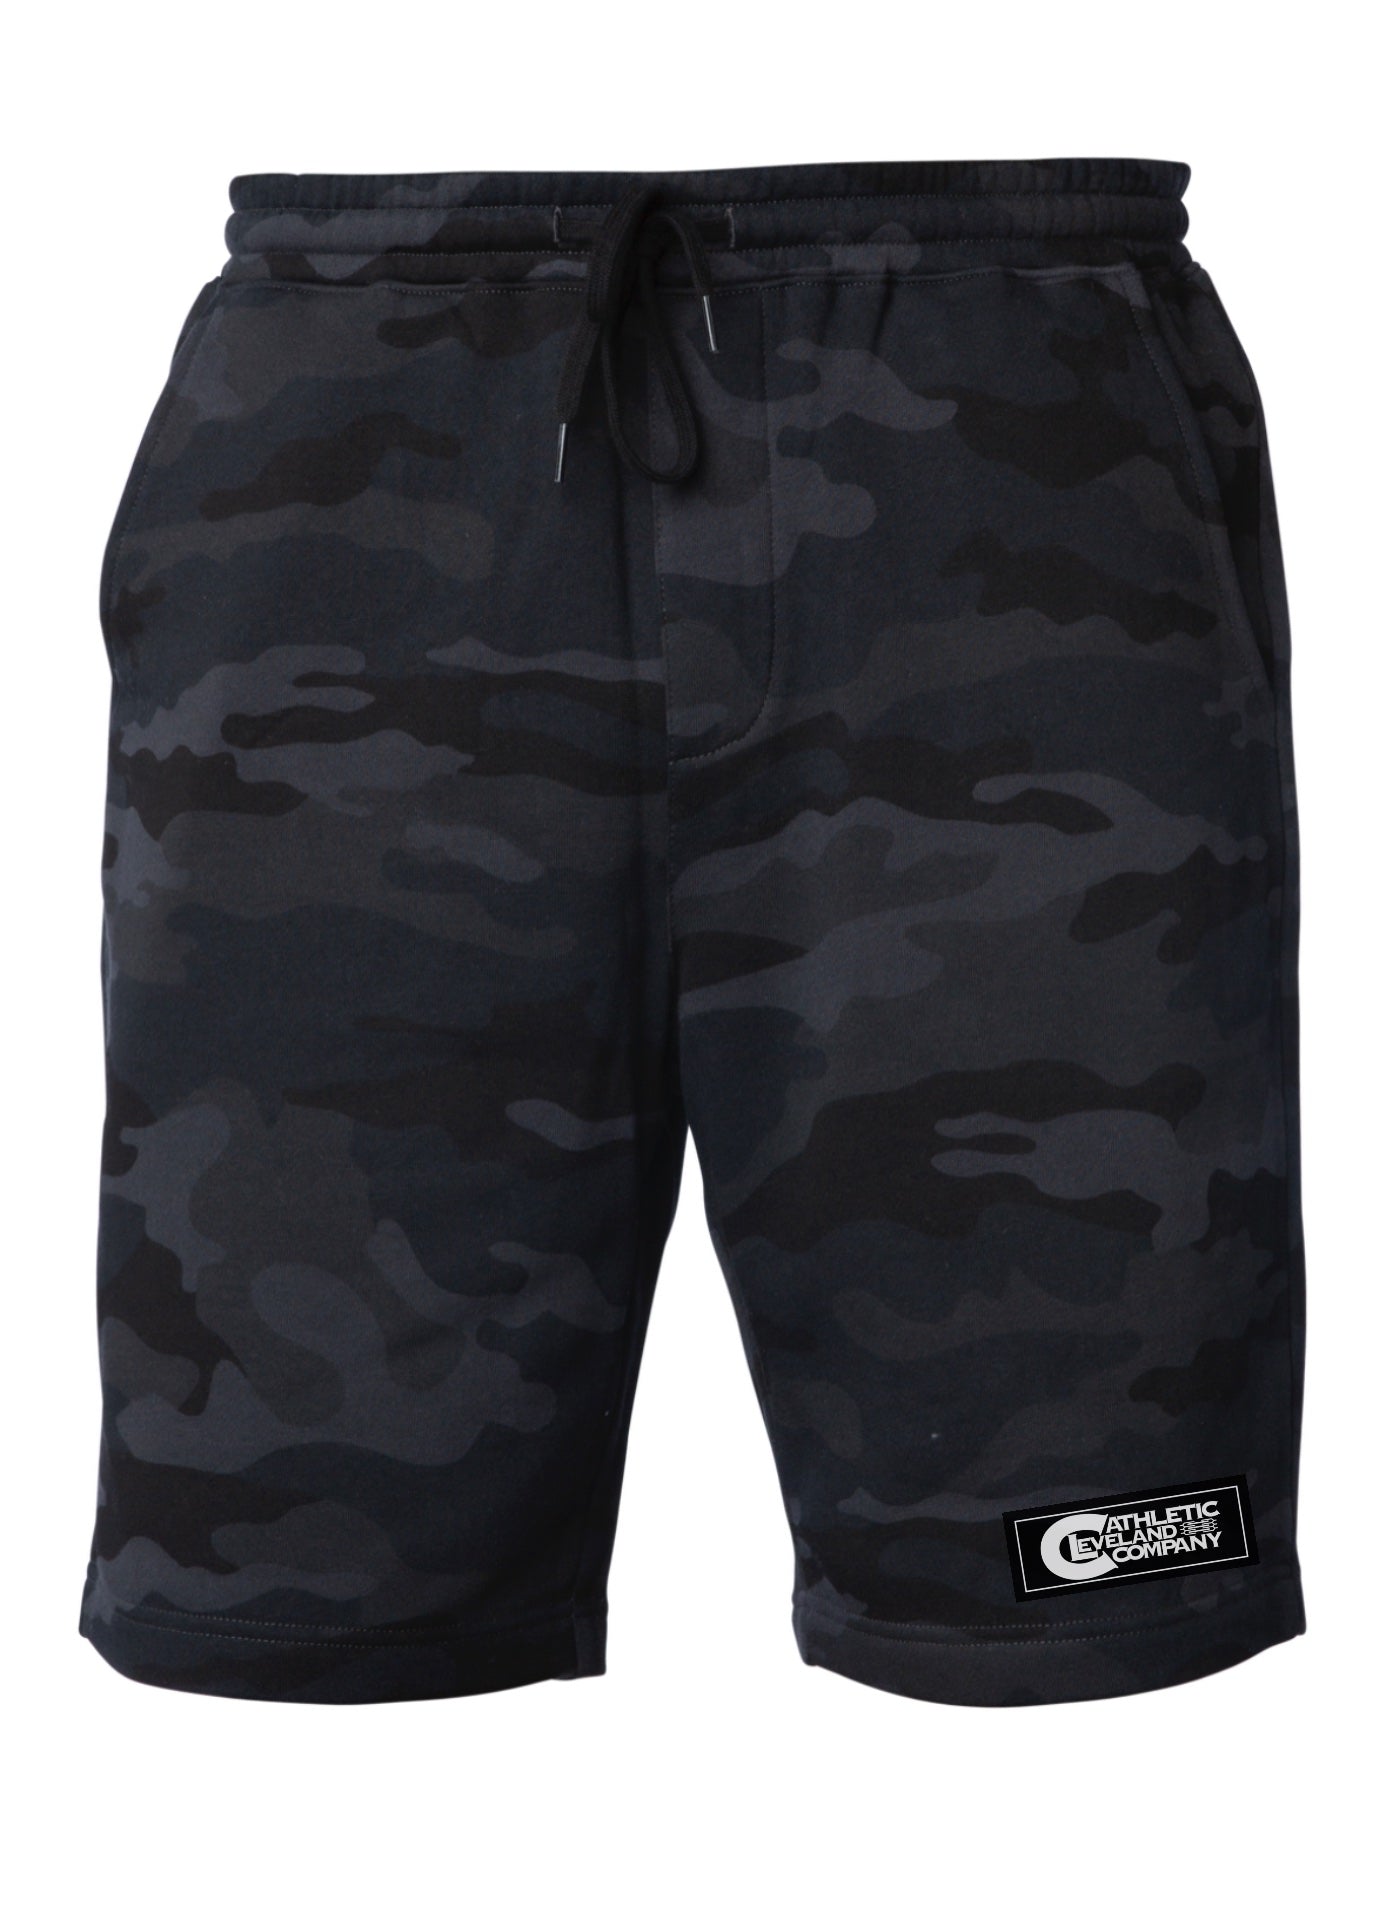 Men’s CAC Black Camo Shorts